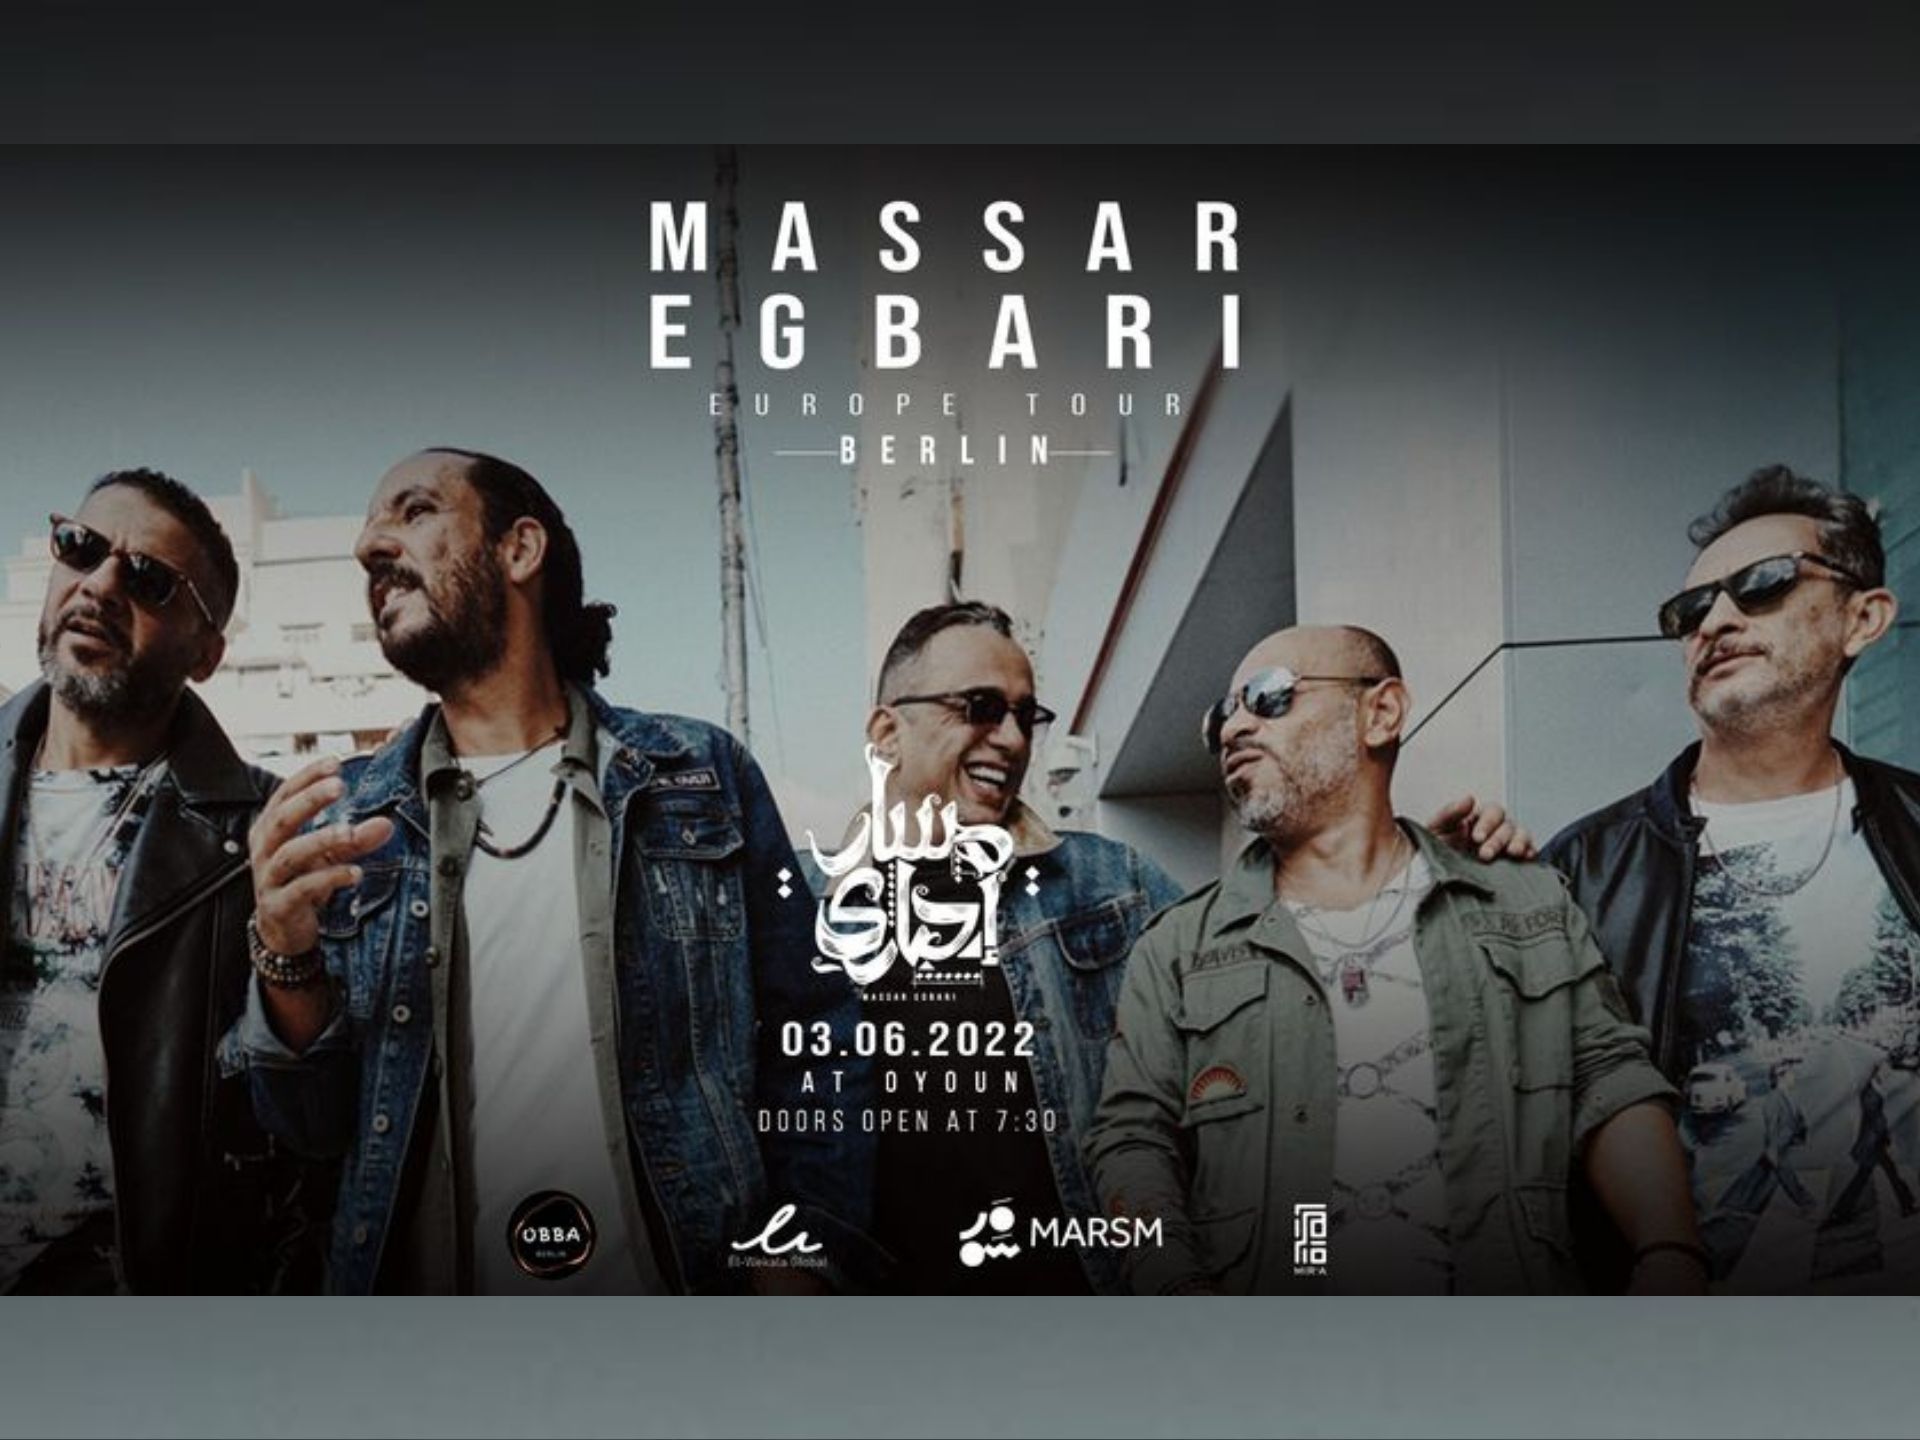 Concert by Massar Egbari